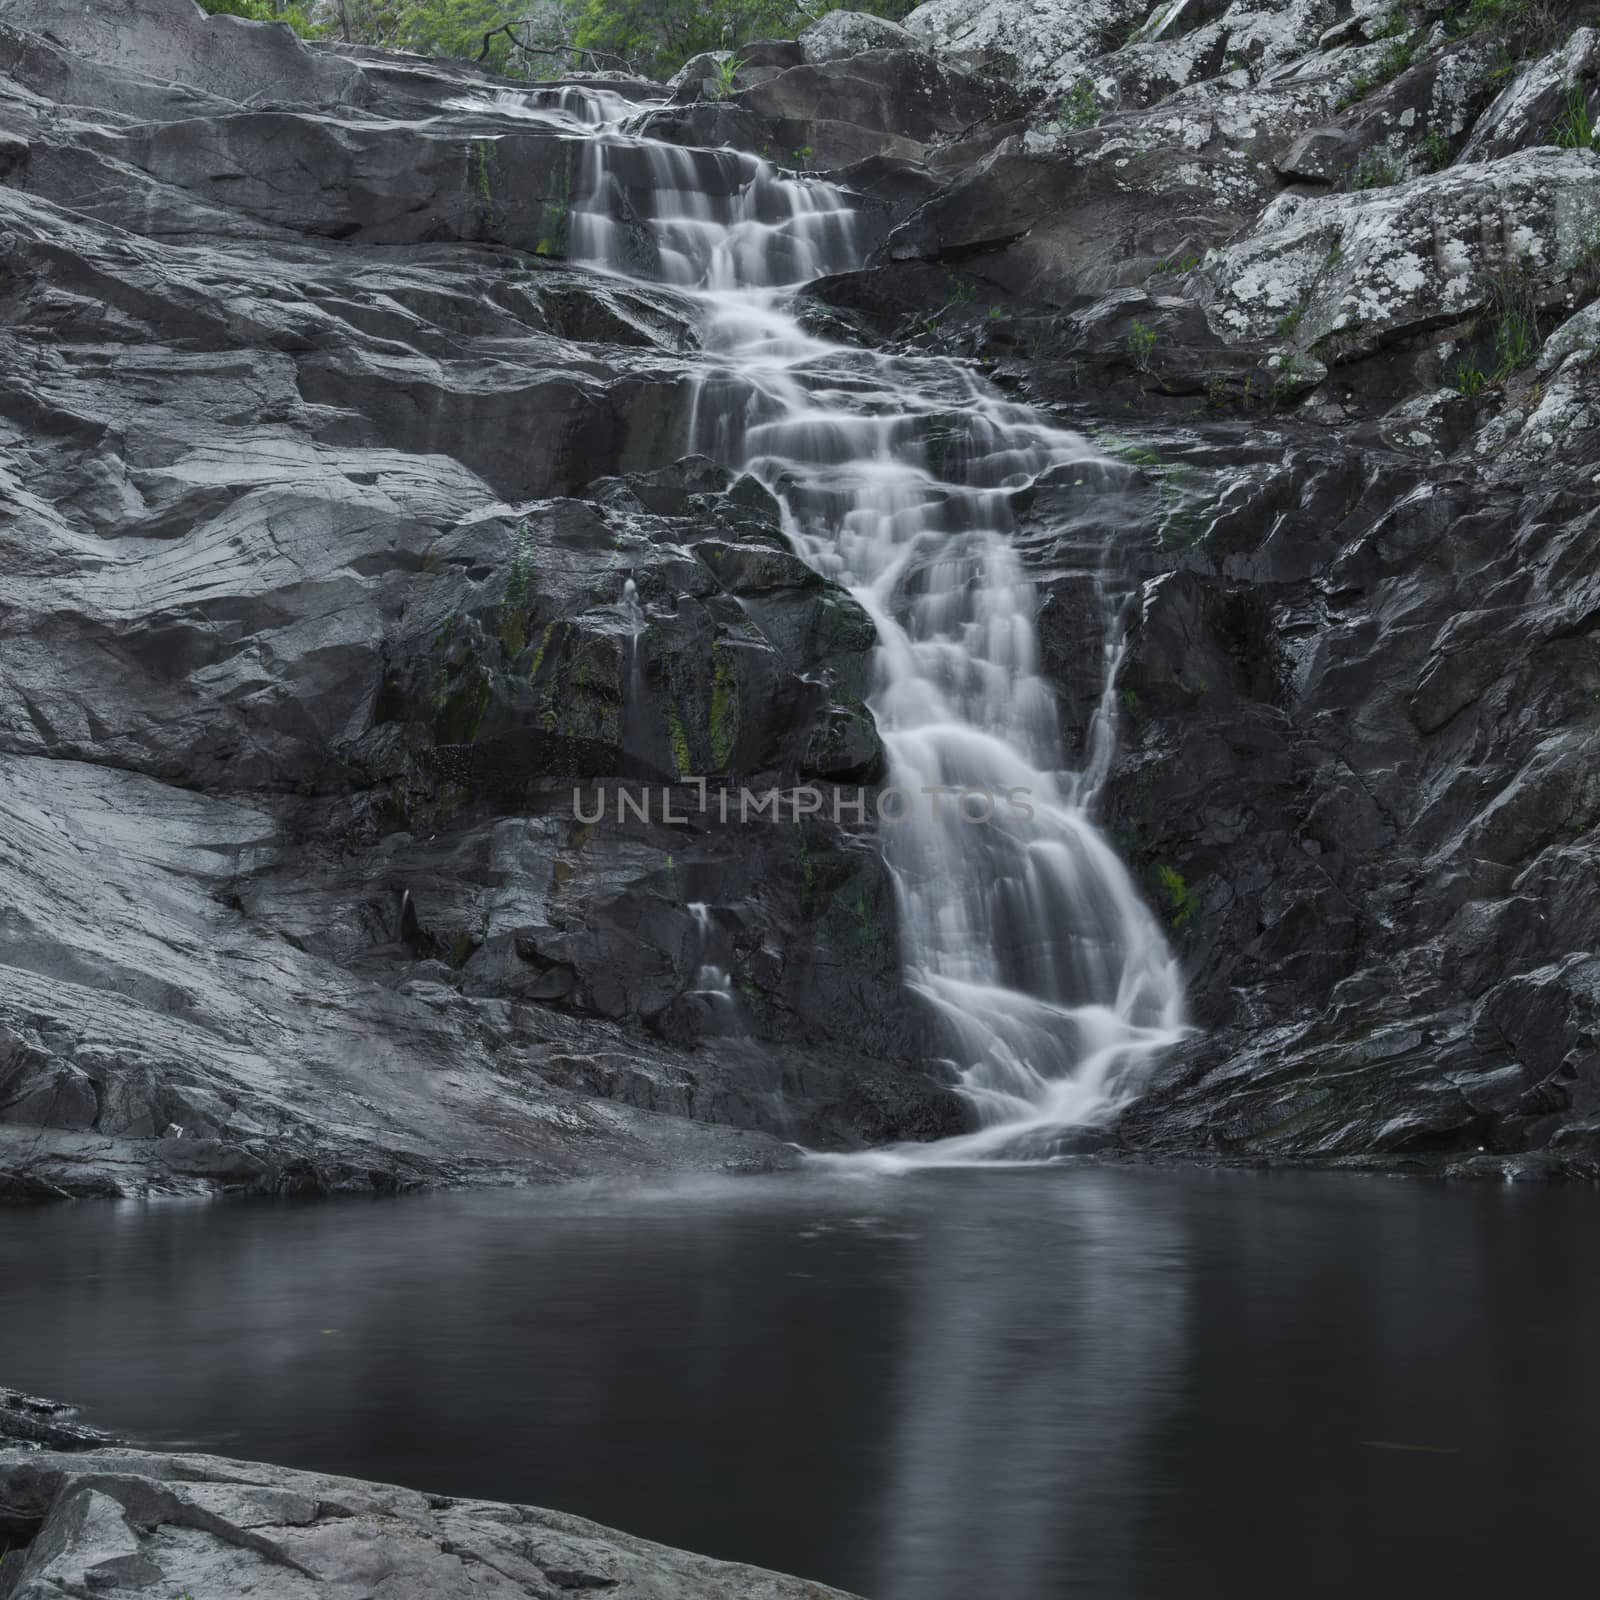 Cedar Creek Falls in Mount Tamborine by artistrobd